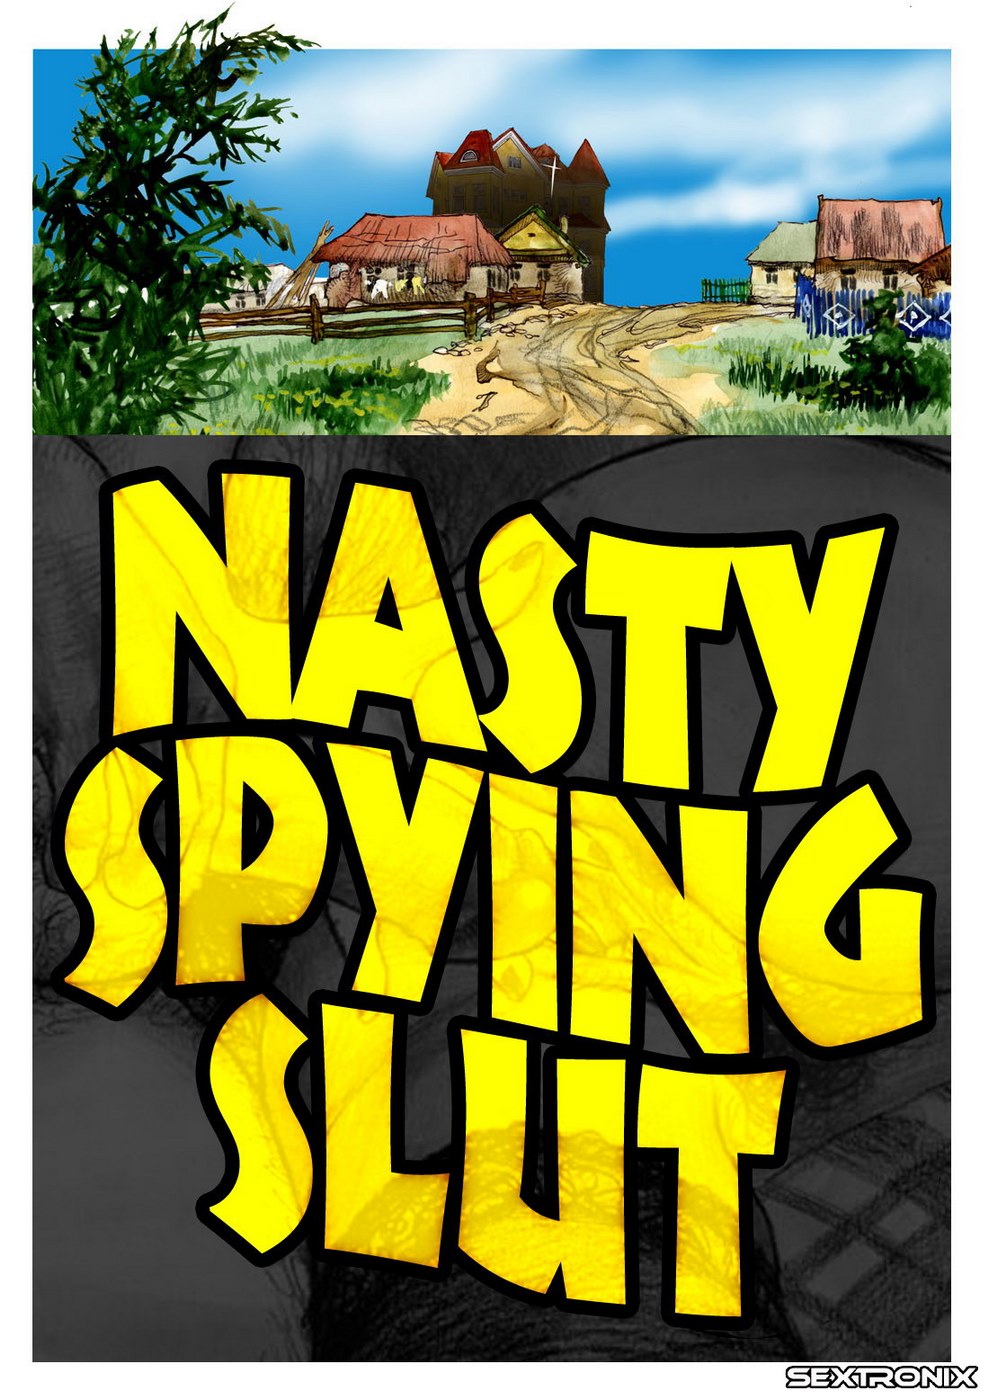 Nasty Spying Slut -Sextronix - Porn Cartoon Comics